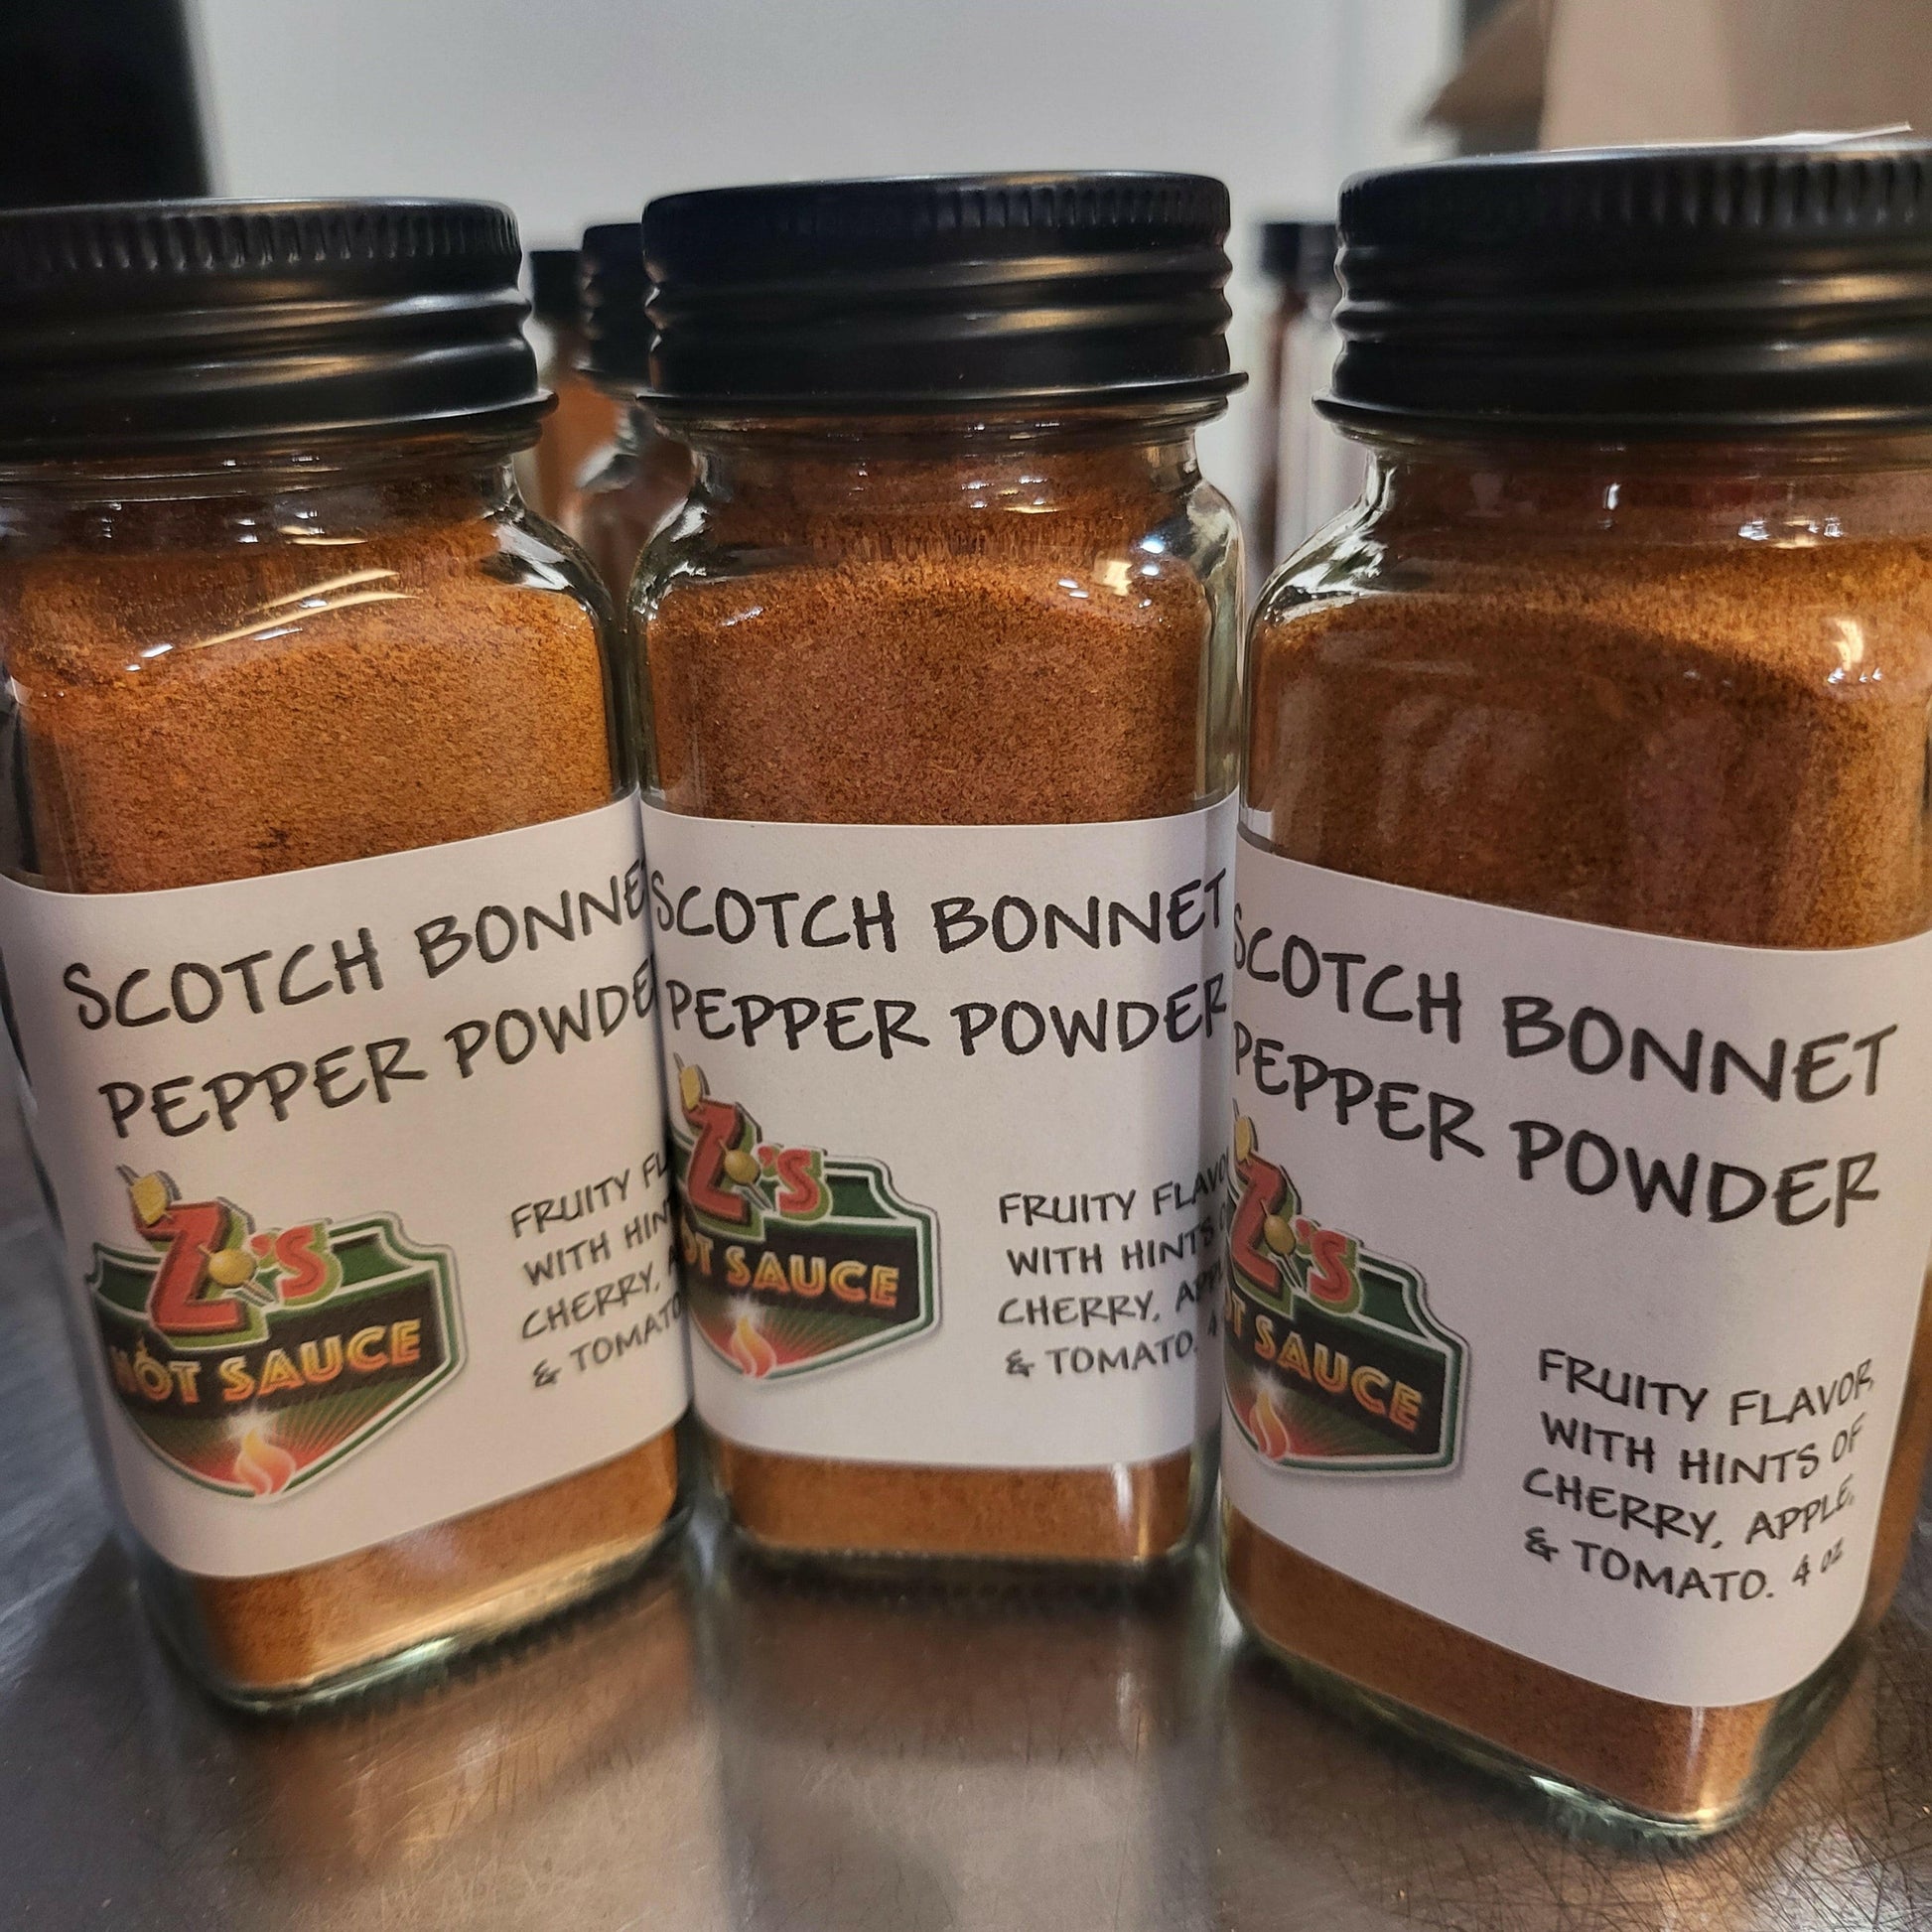 Scotch Bonnet Pepper Powder.